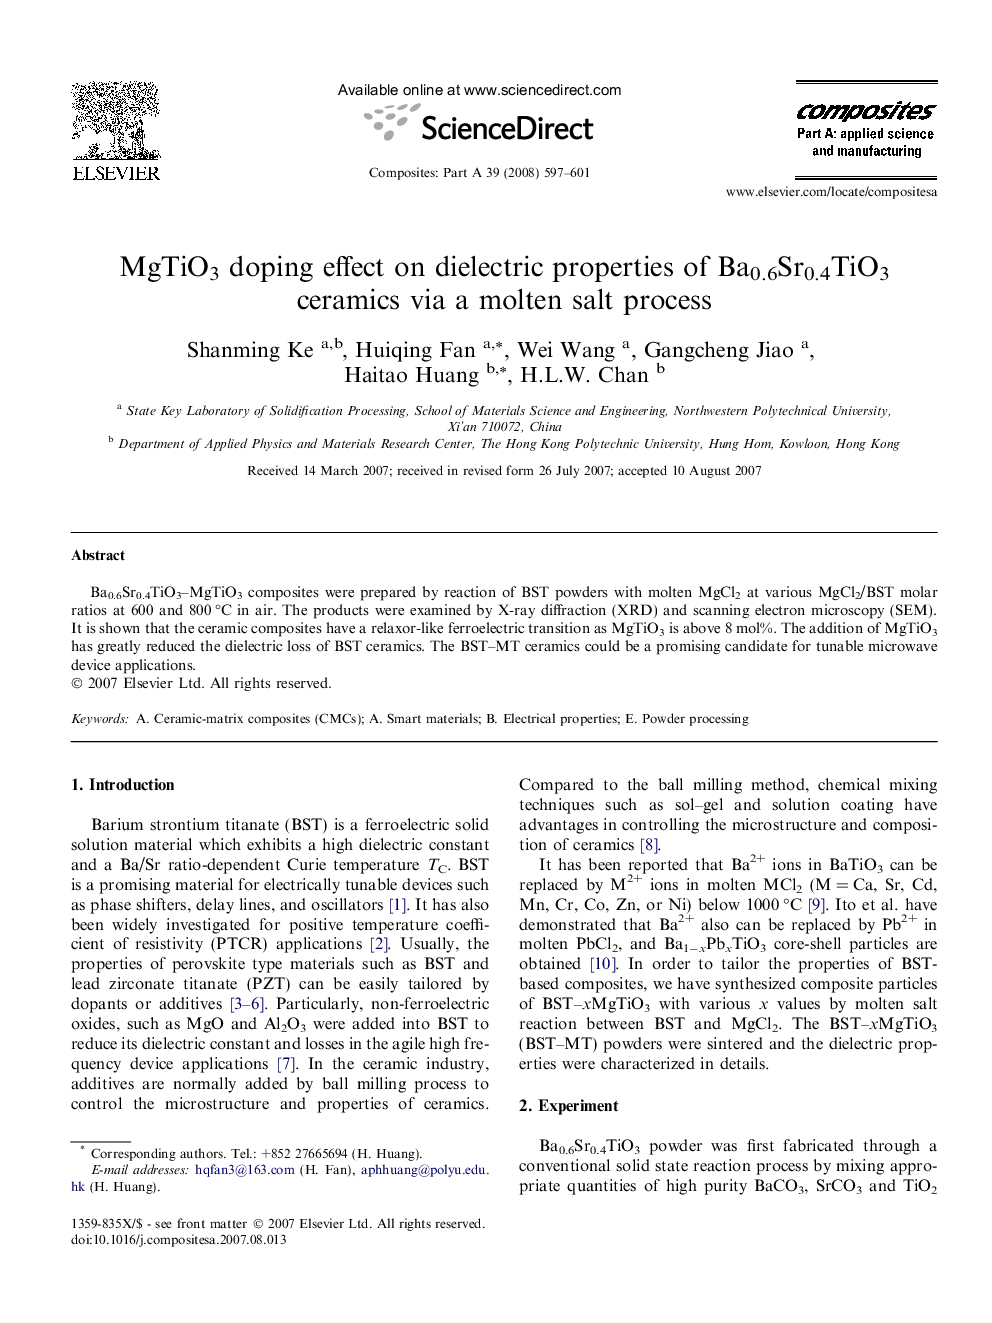 MgTiO3 doping effect on dielectric properties of Ba0.6Sr0.4TiO3 ceramics via a molten salt process